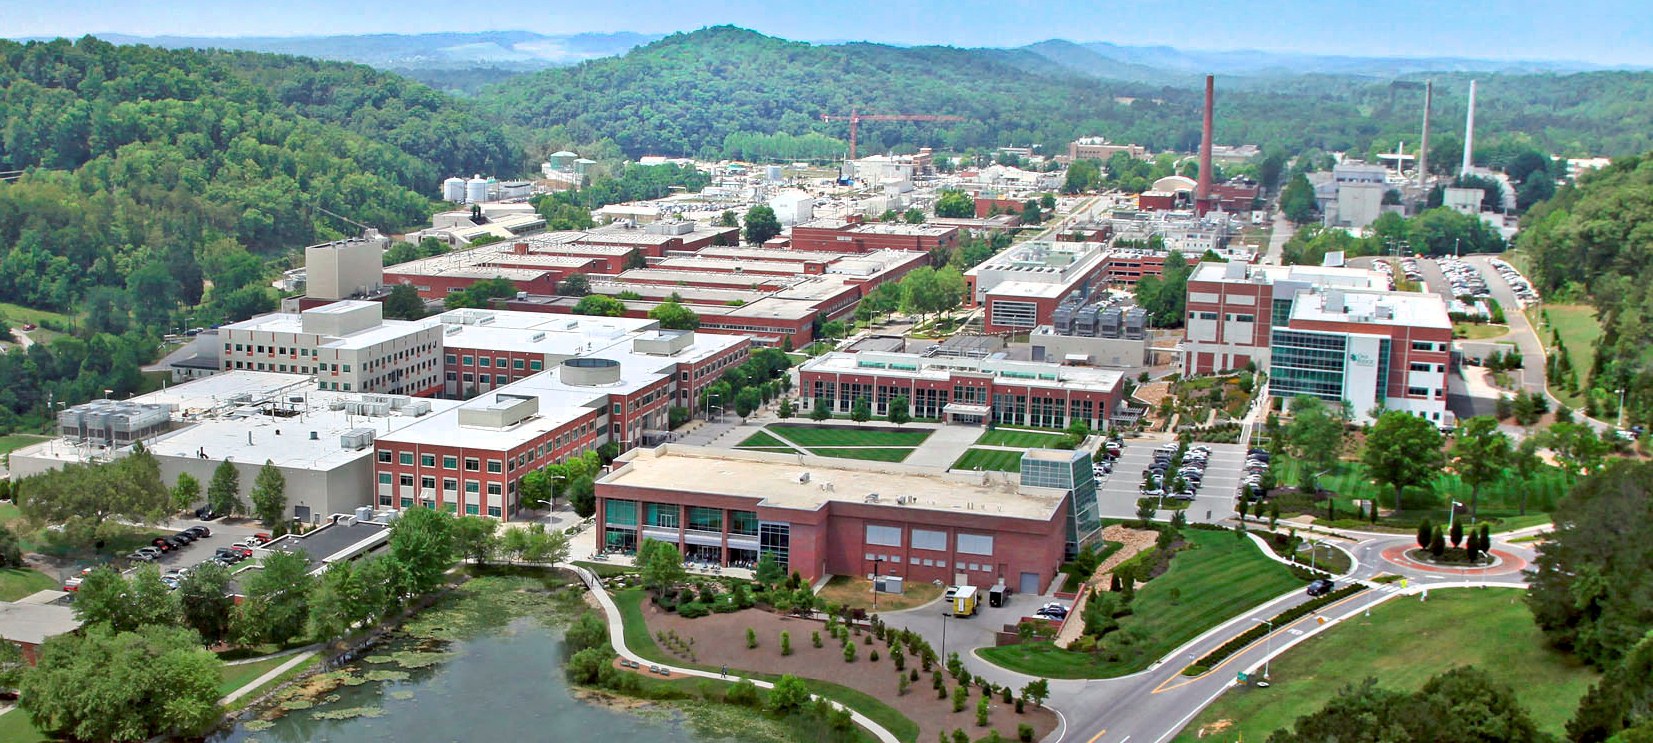 Oak_Ridge_National_Laboratory_Aerial_View